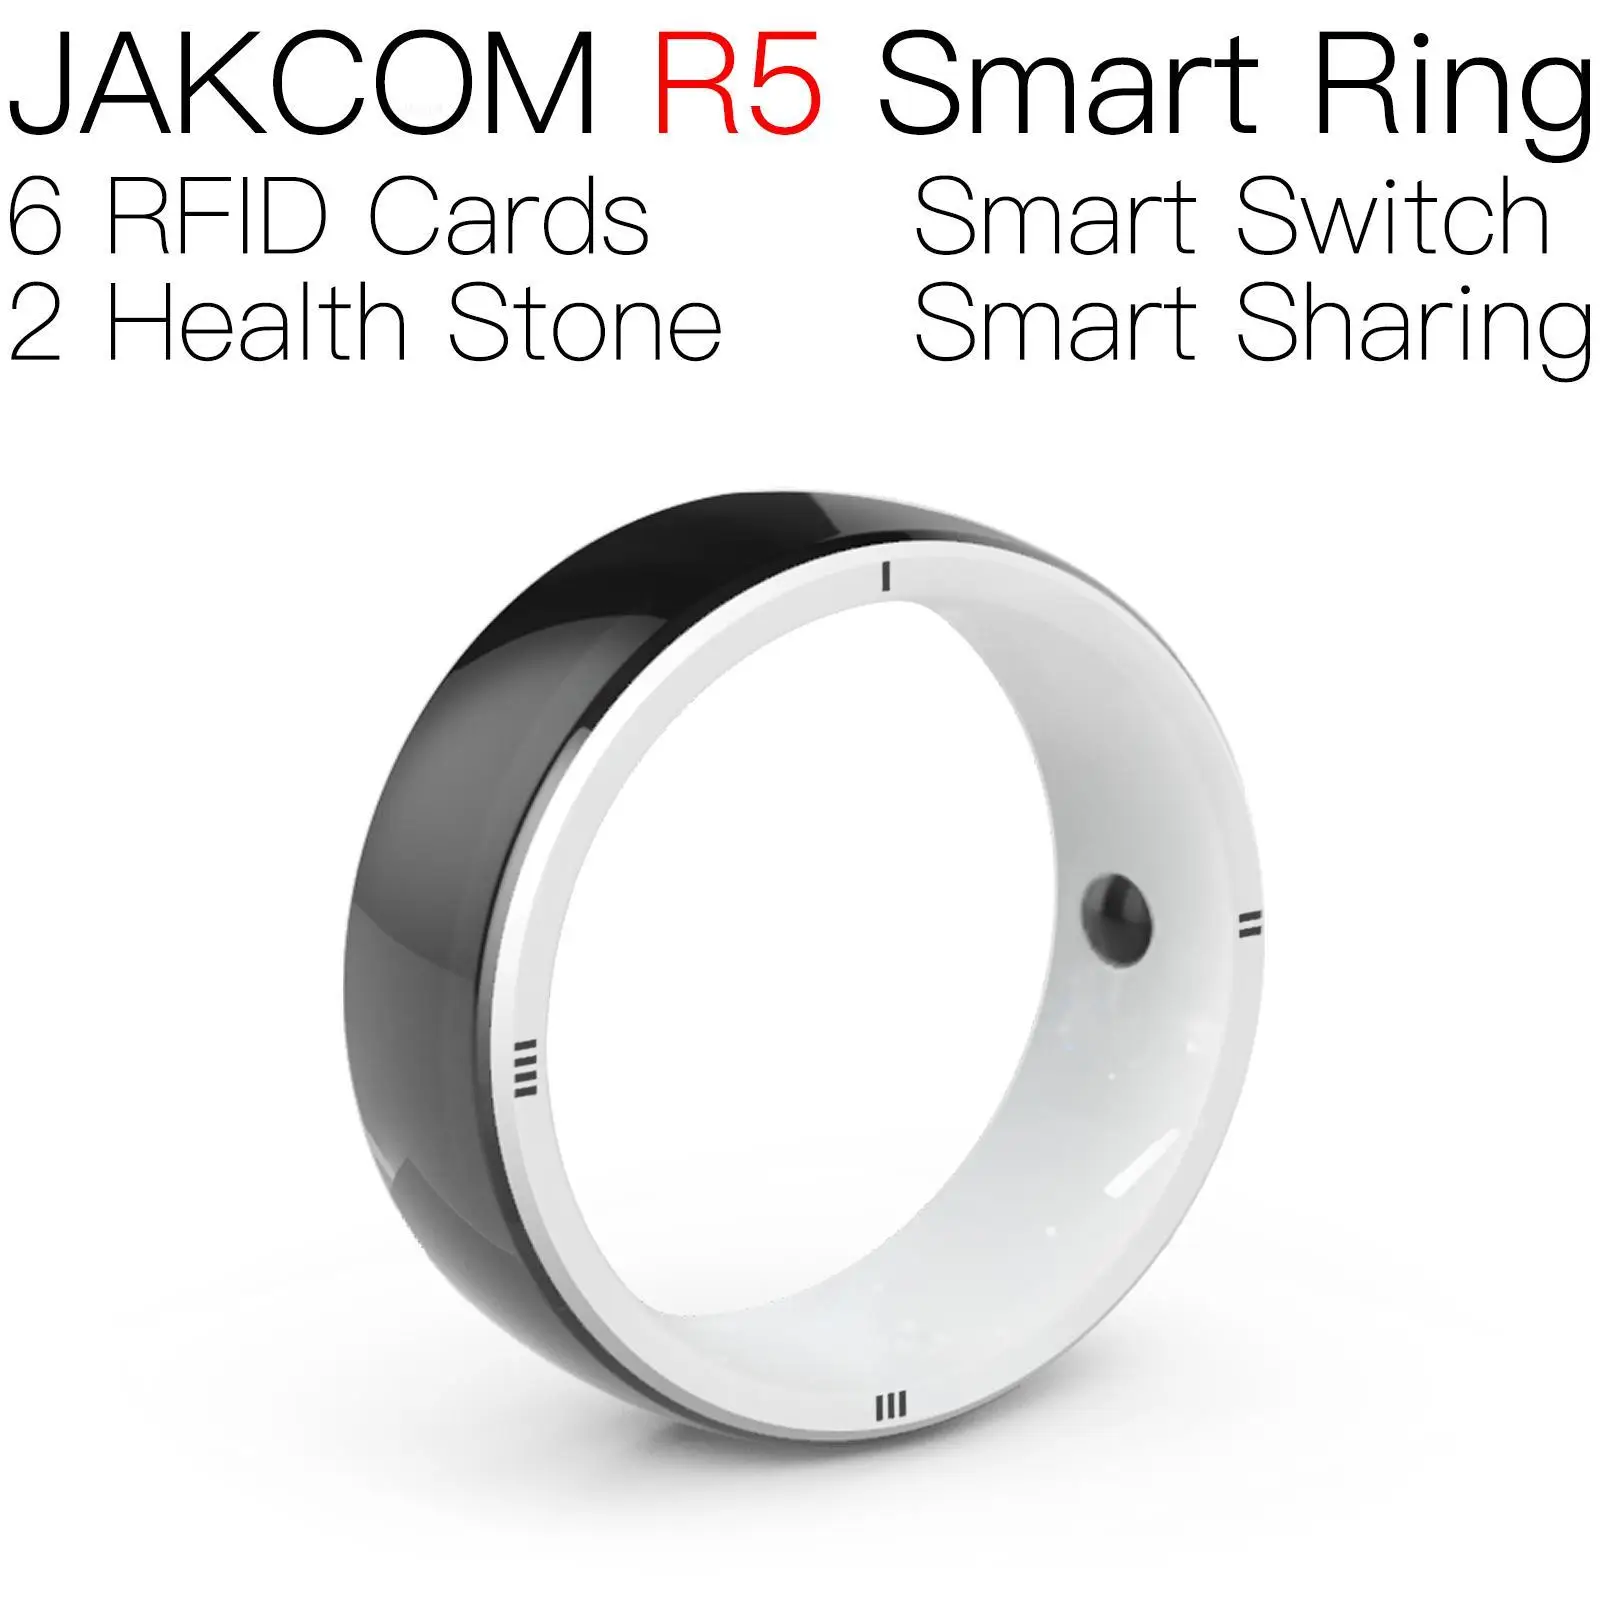 

JAKCOM R5 Smart Ring better than chicken rfid notch filter rf uhf tag nfc store sewable 125 khz chip sticker coin ring test